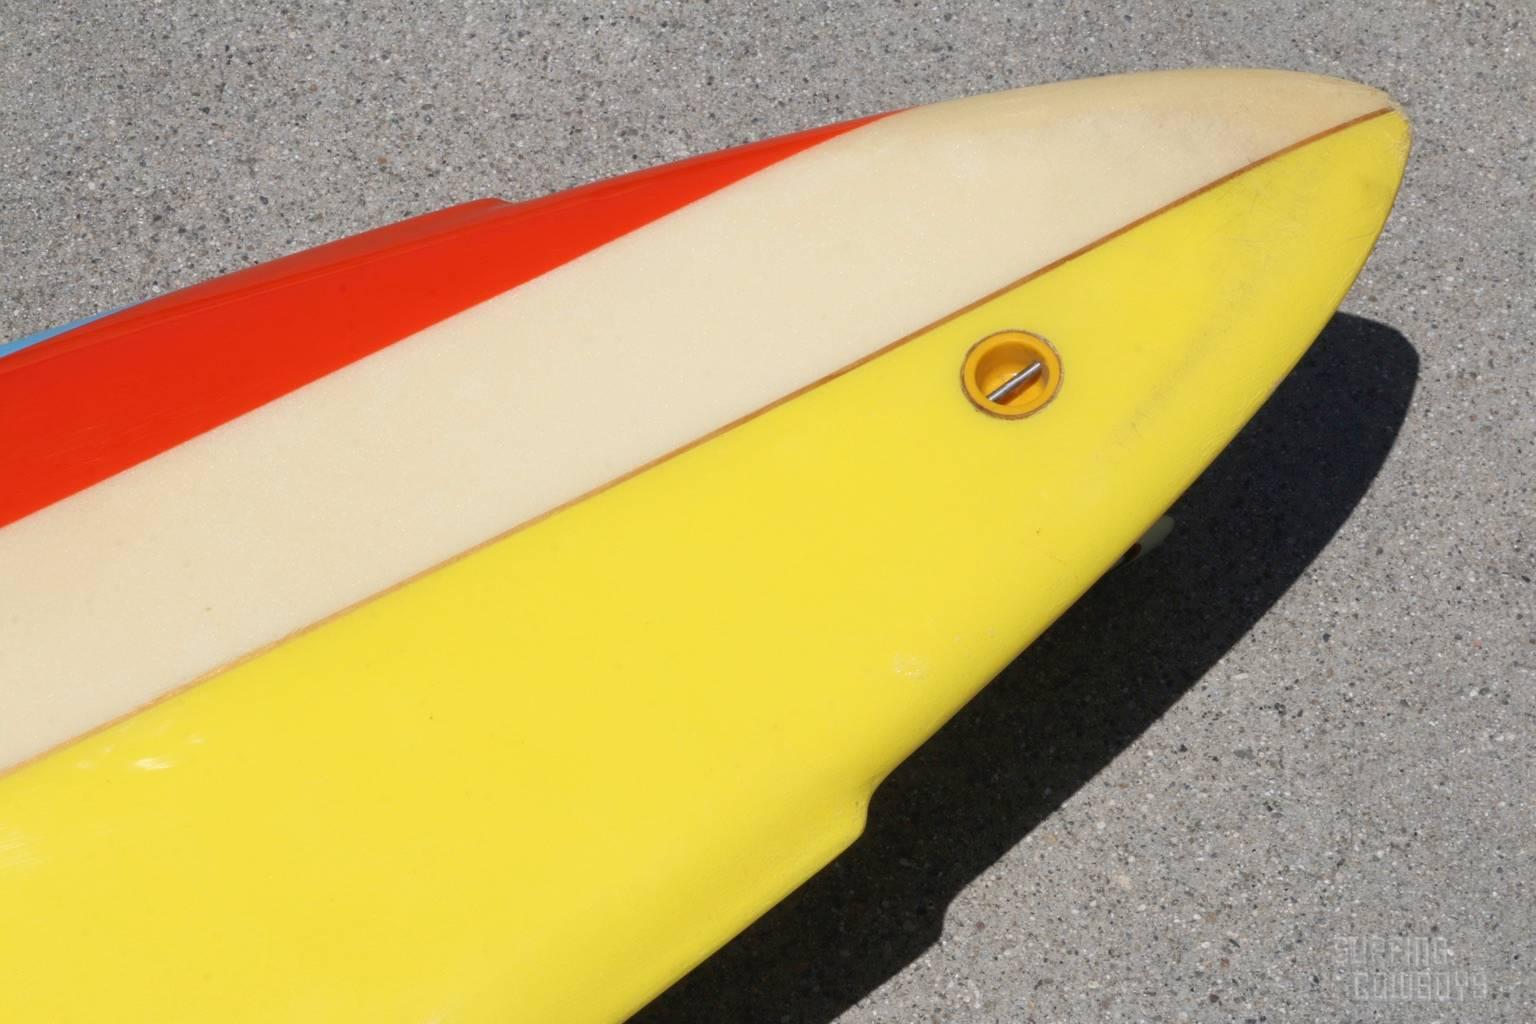 Fiberglass Natural Progression Topanga Canyon Surfboard circa 1975, All Original For Sale